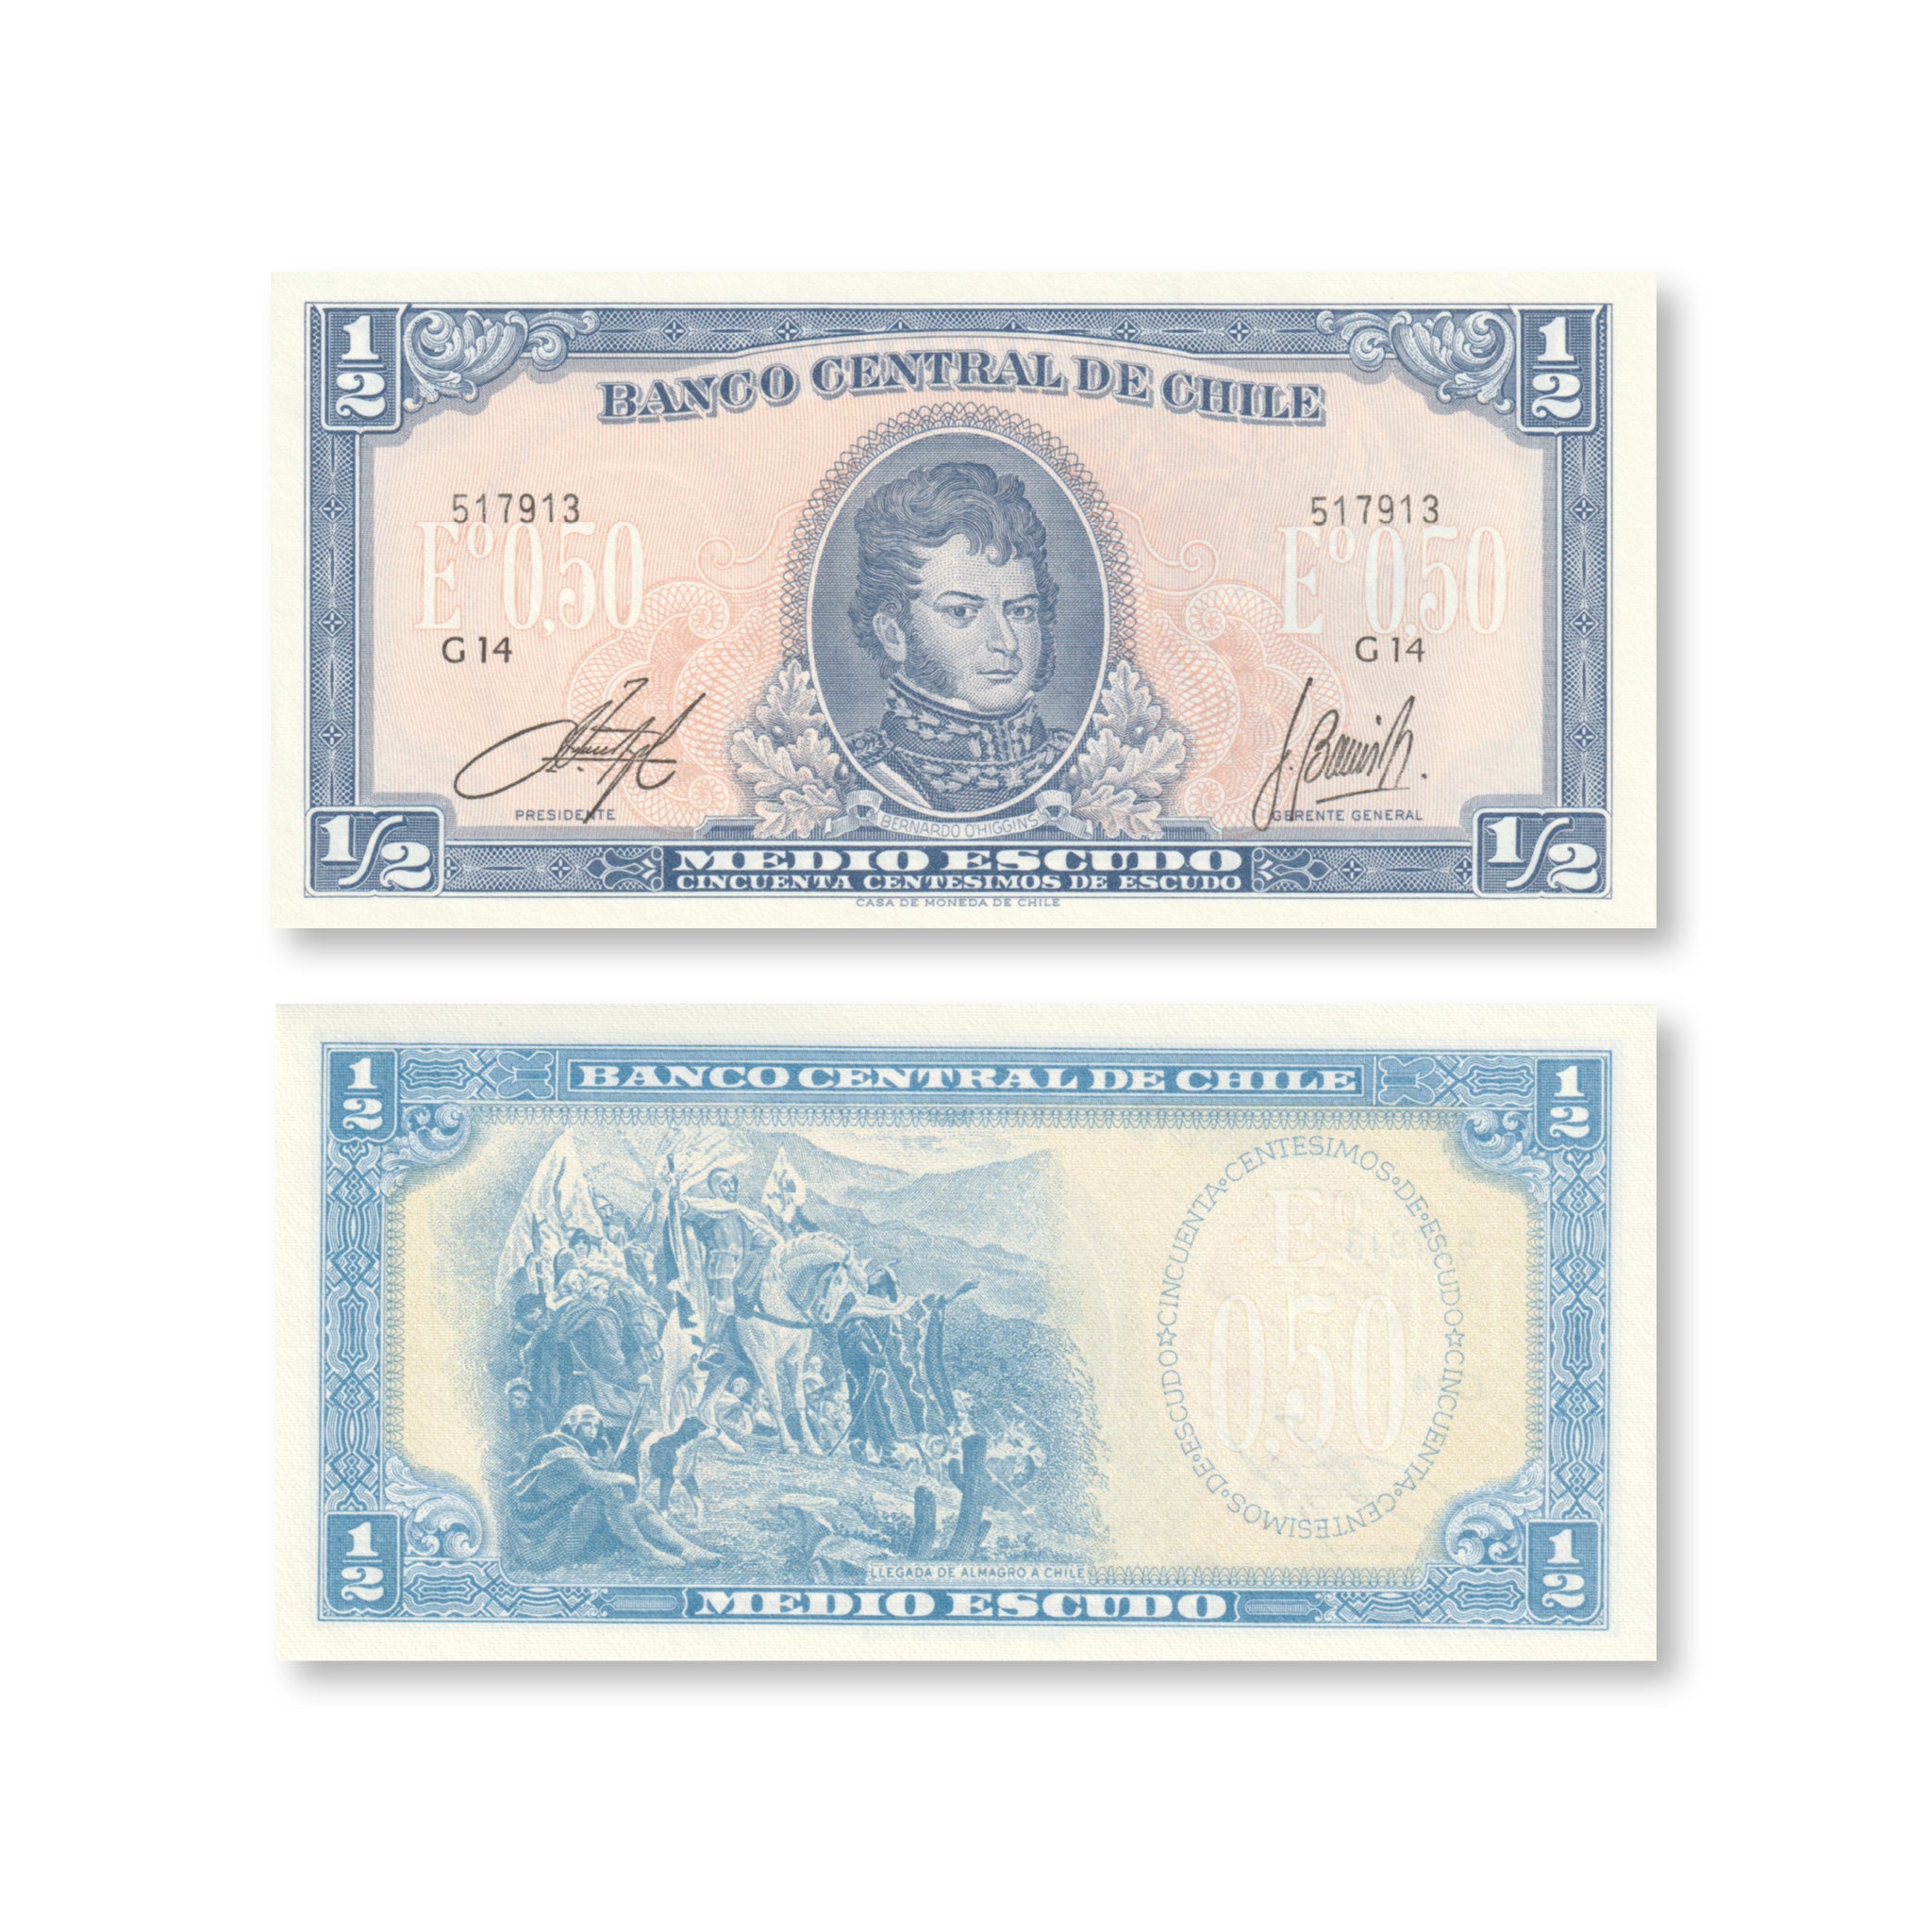 Chile Half Escudo, 1962, B268c1, P134Aa, UNC - Robert's World Money - World Banknotes